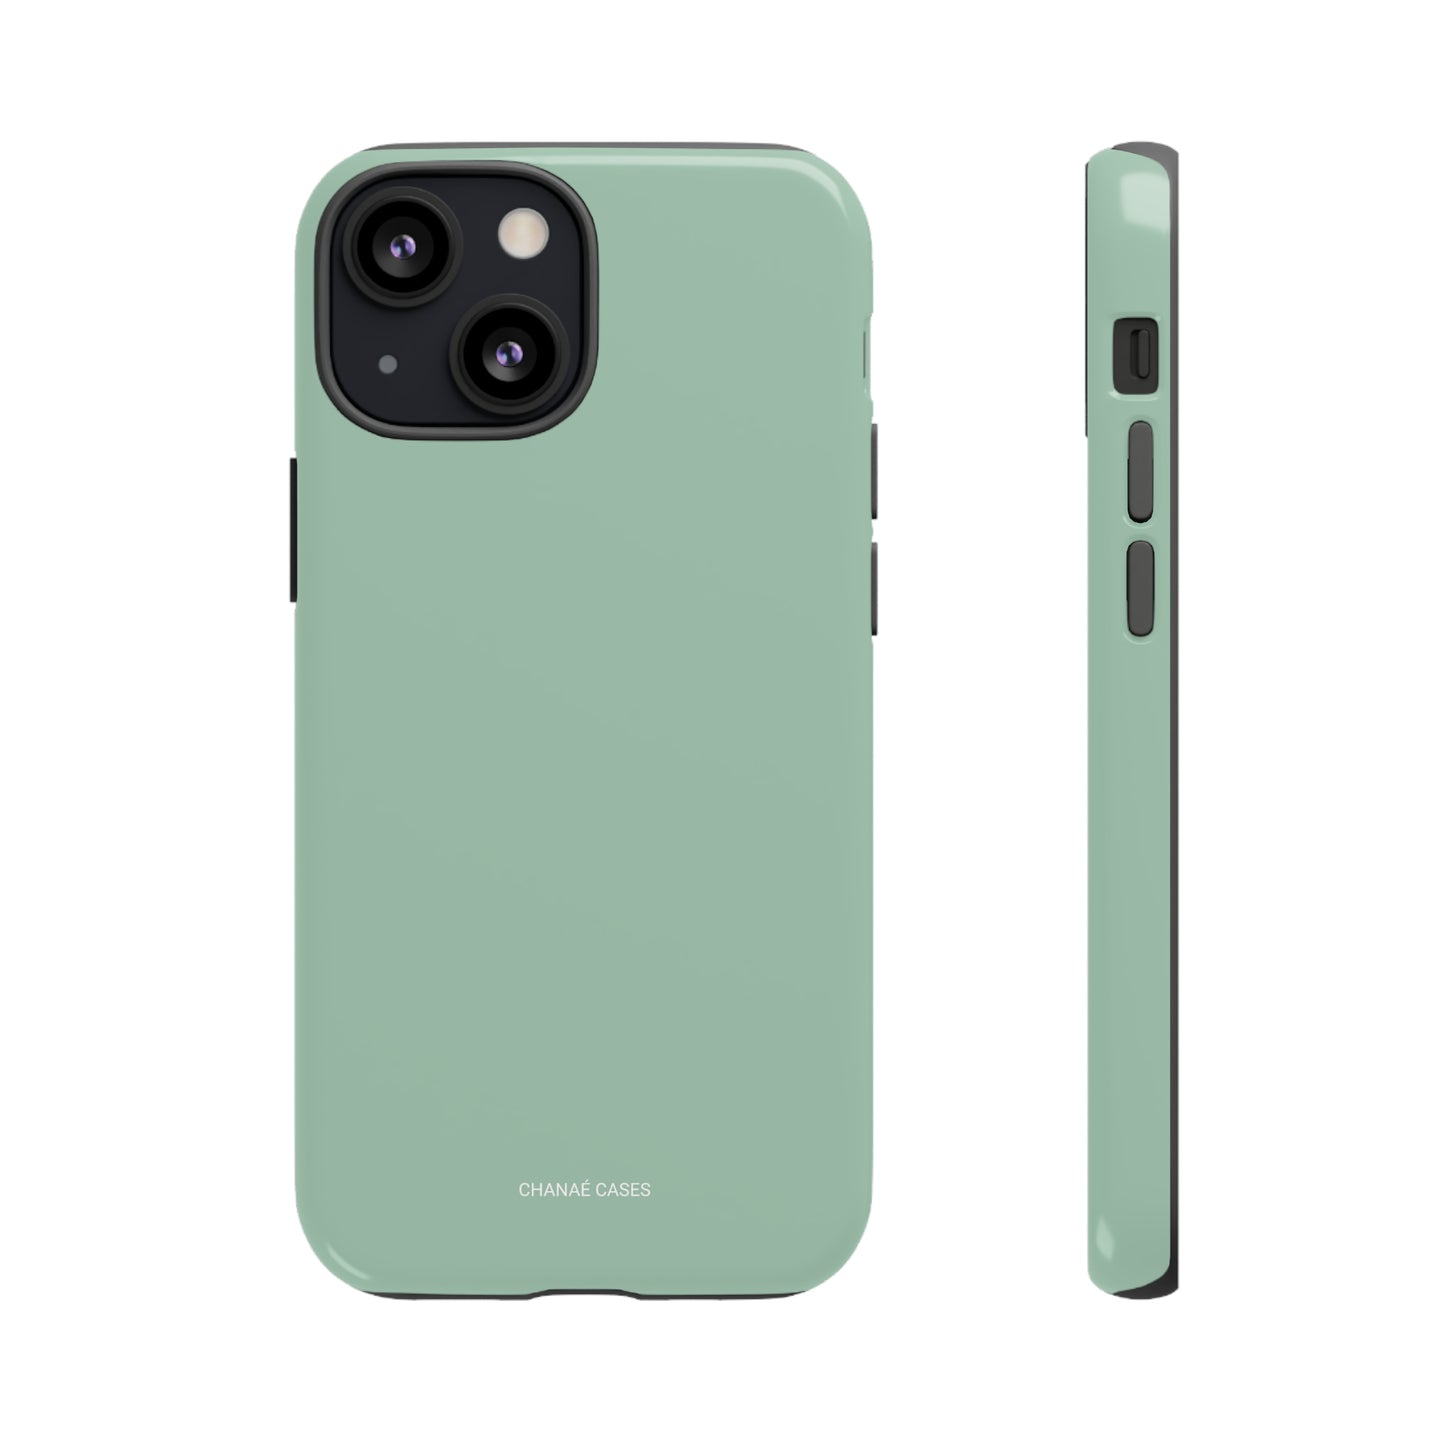 Misty iPhone "Tough" Case (Grayed Jade)